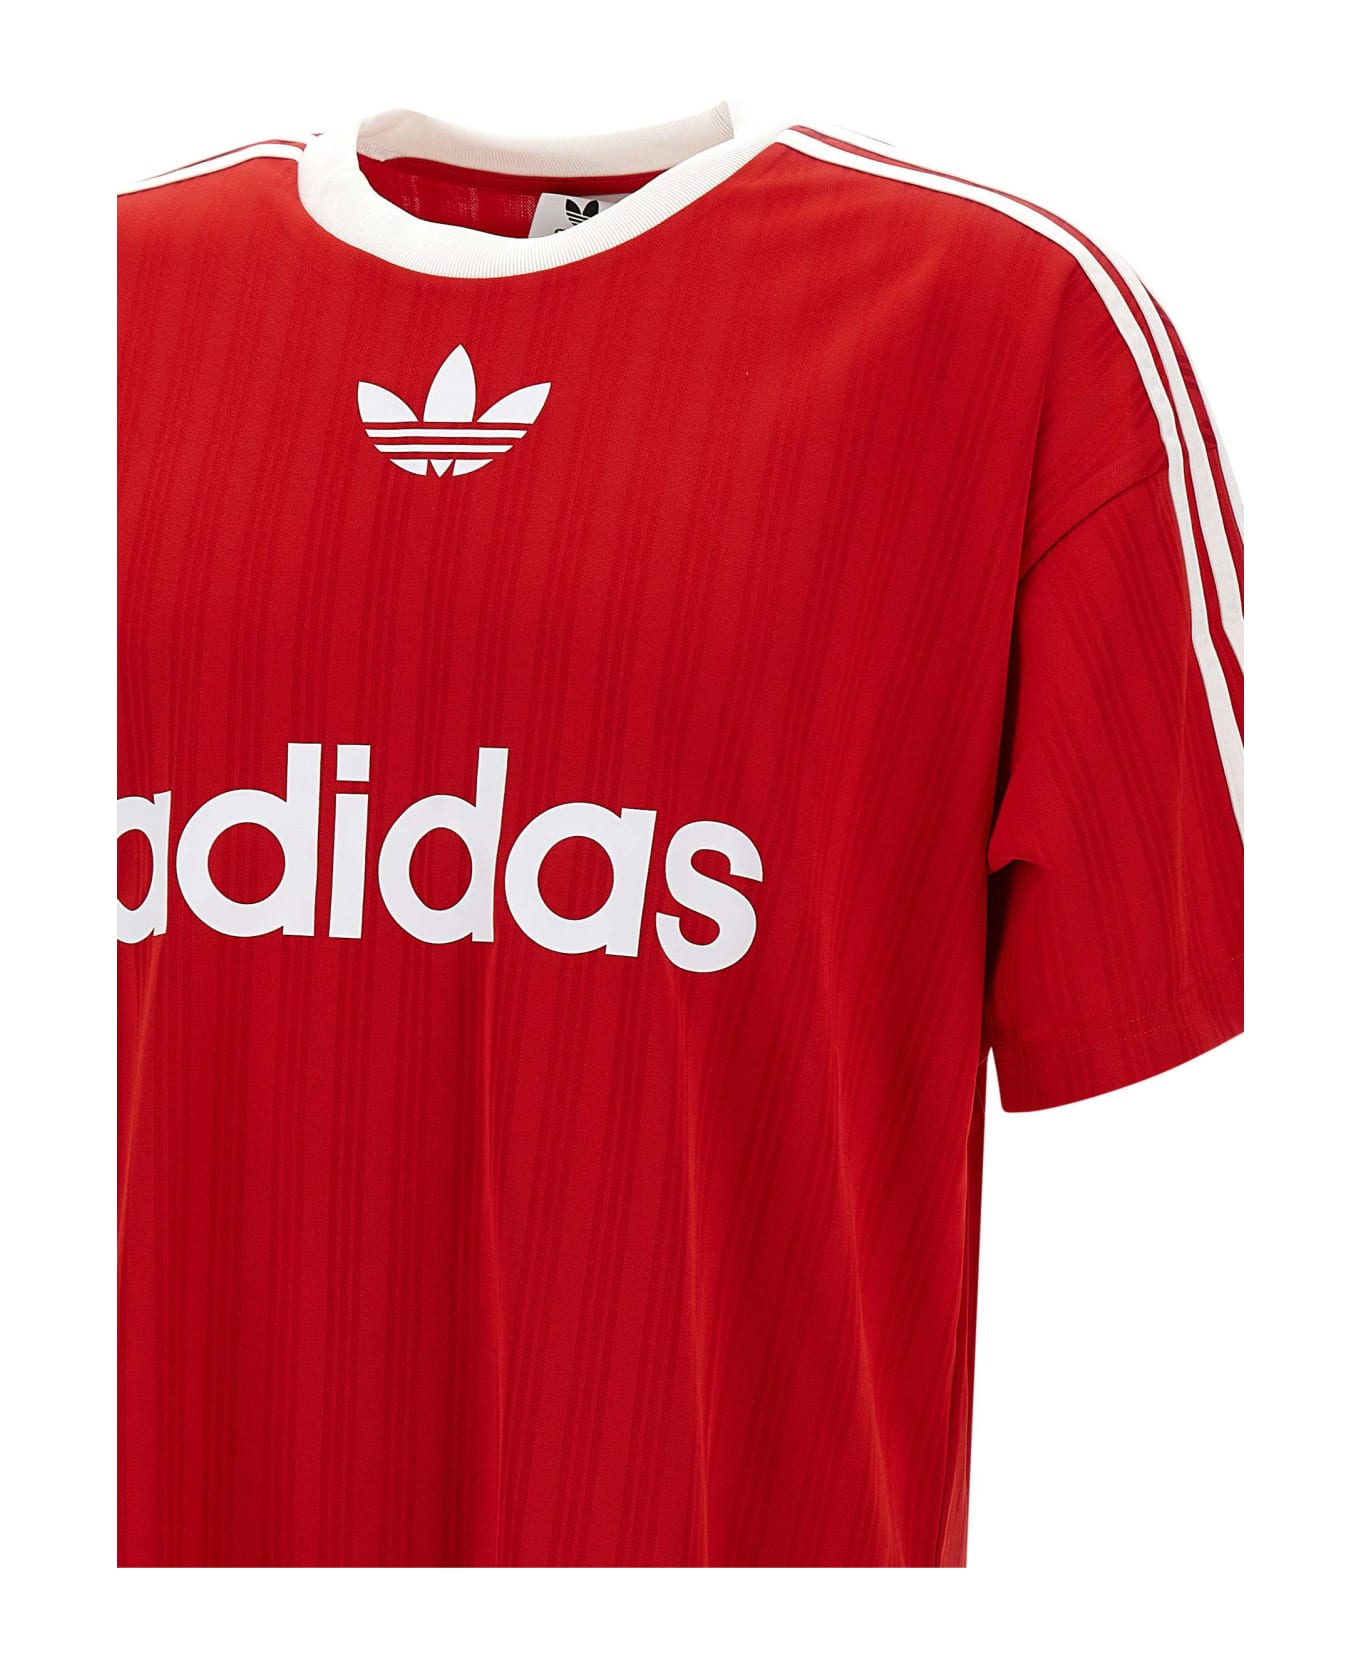 Adidas 'adicolor' Jacquard Fabric T-shirt - RED